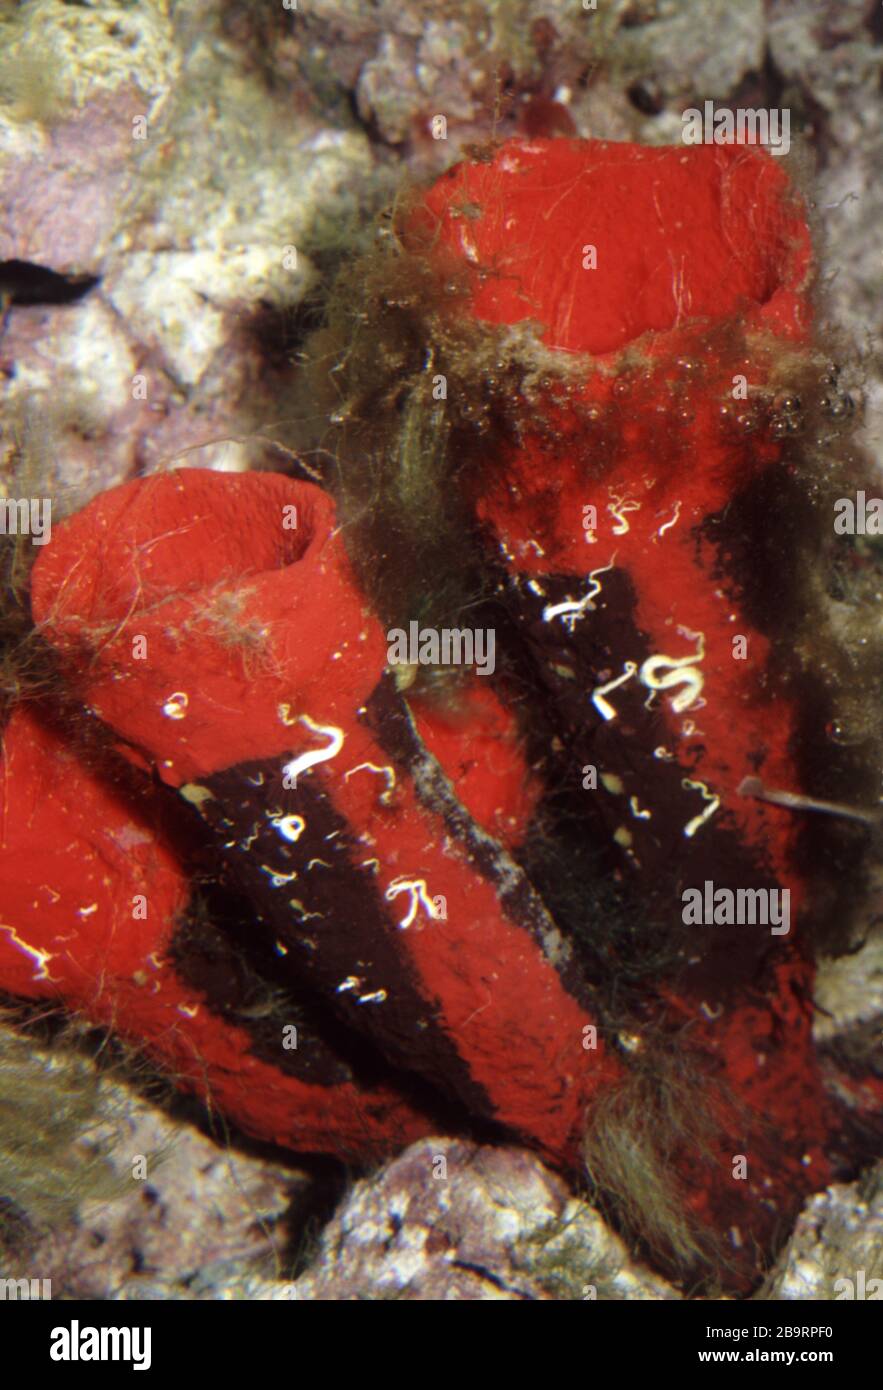 Red tubular sponge, Clathria basilana Stock Photo